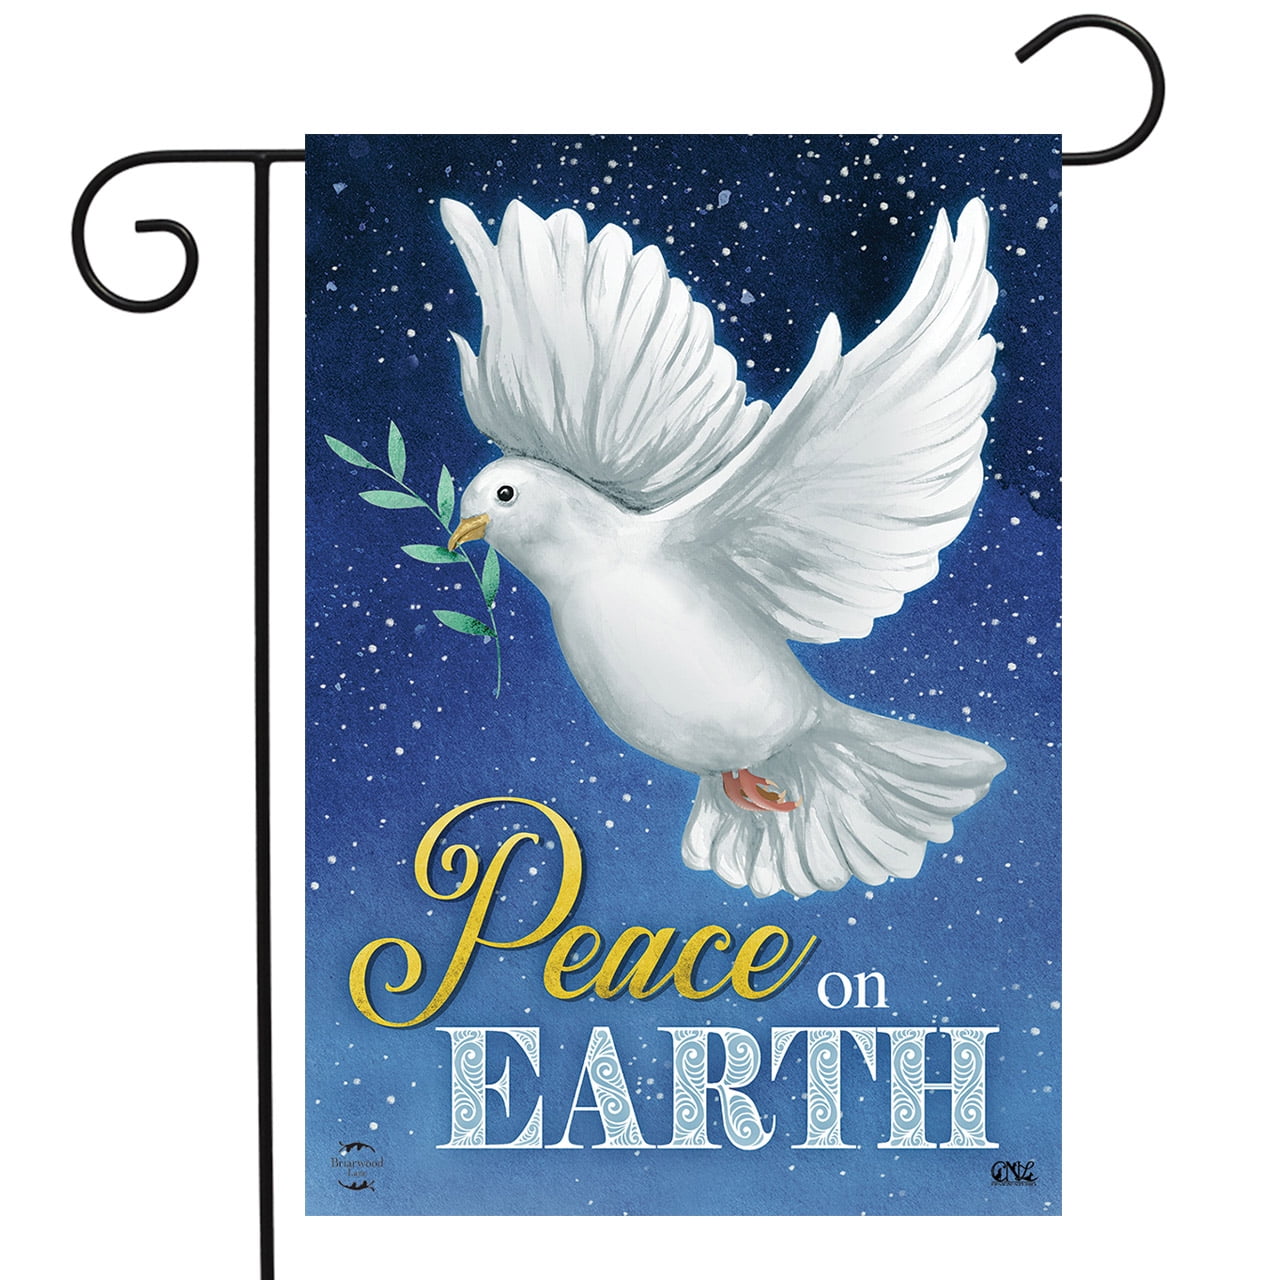 PEACE ANGEL TOLAND APPLIQUE MINI CHRISTMAS GARDEN FLAG 18 X 12 NEW 